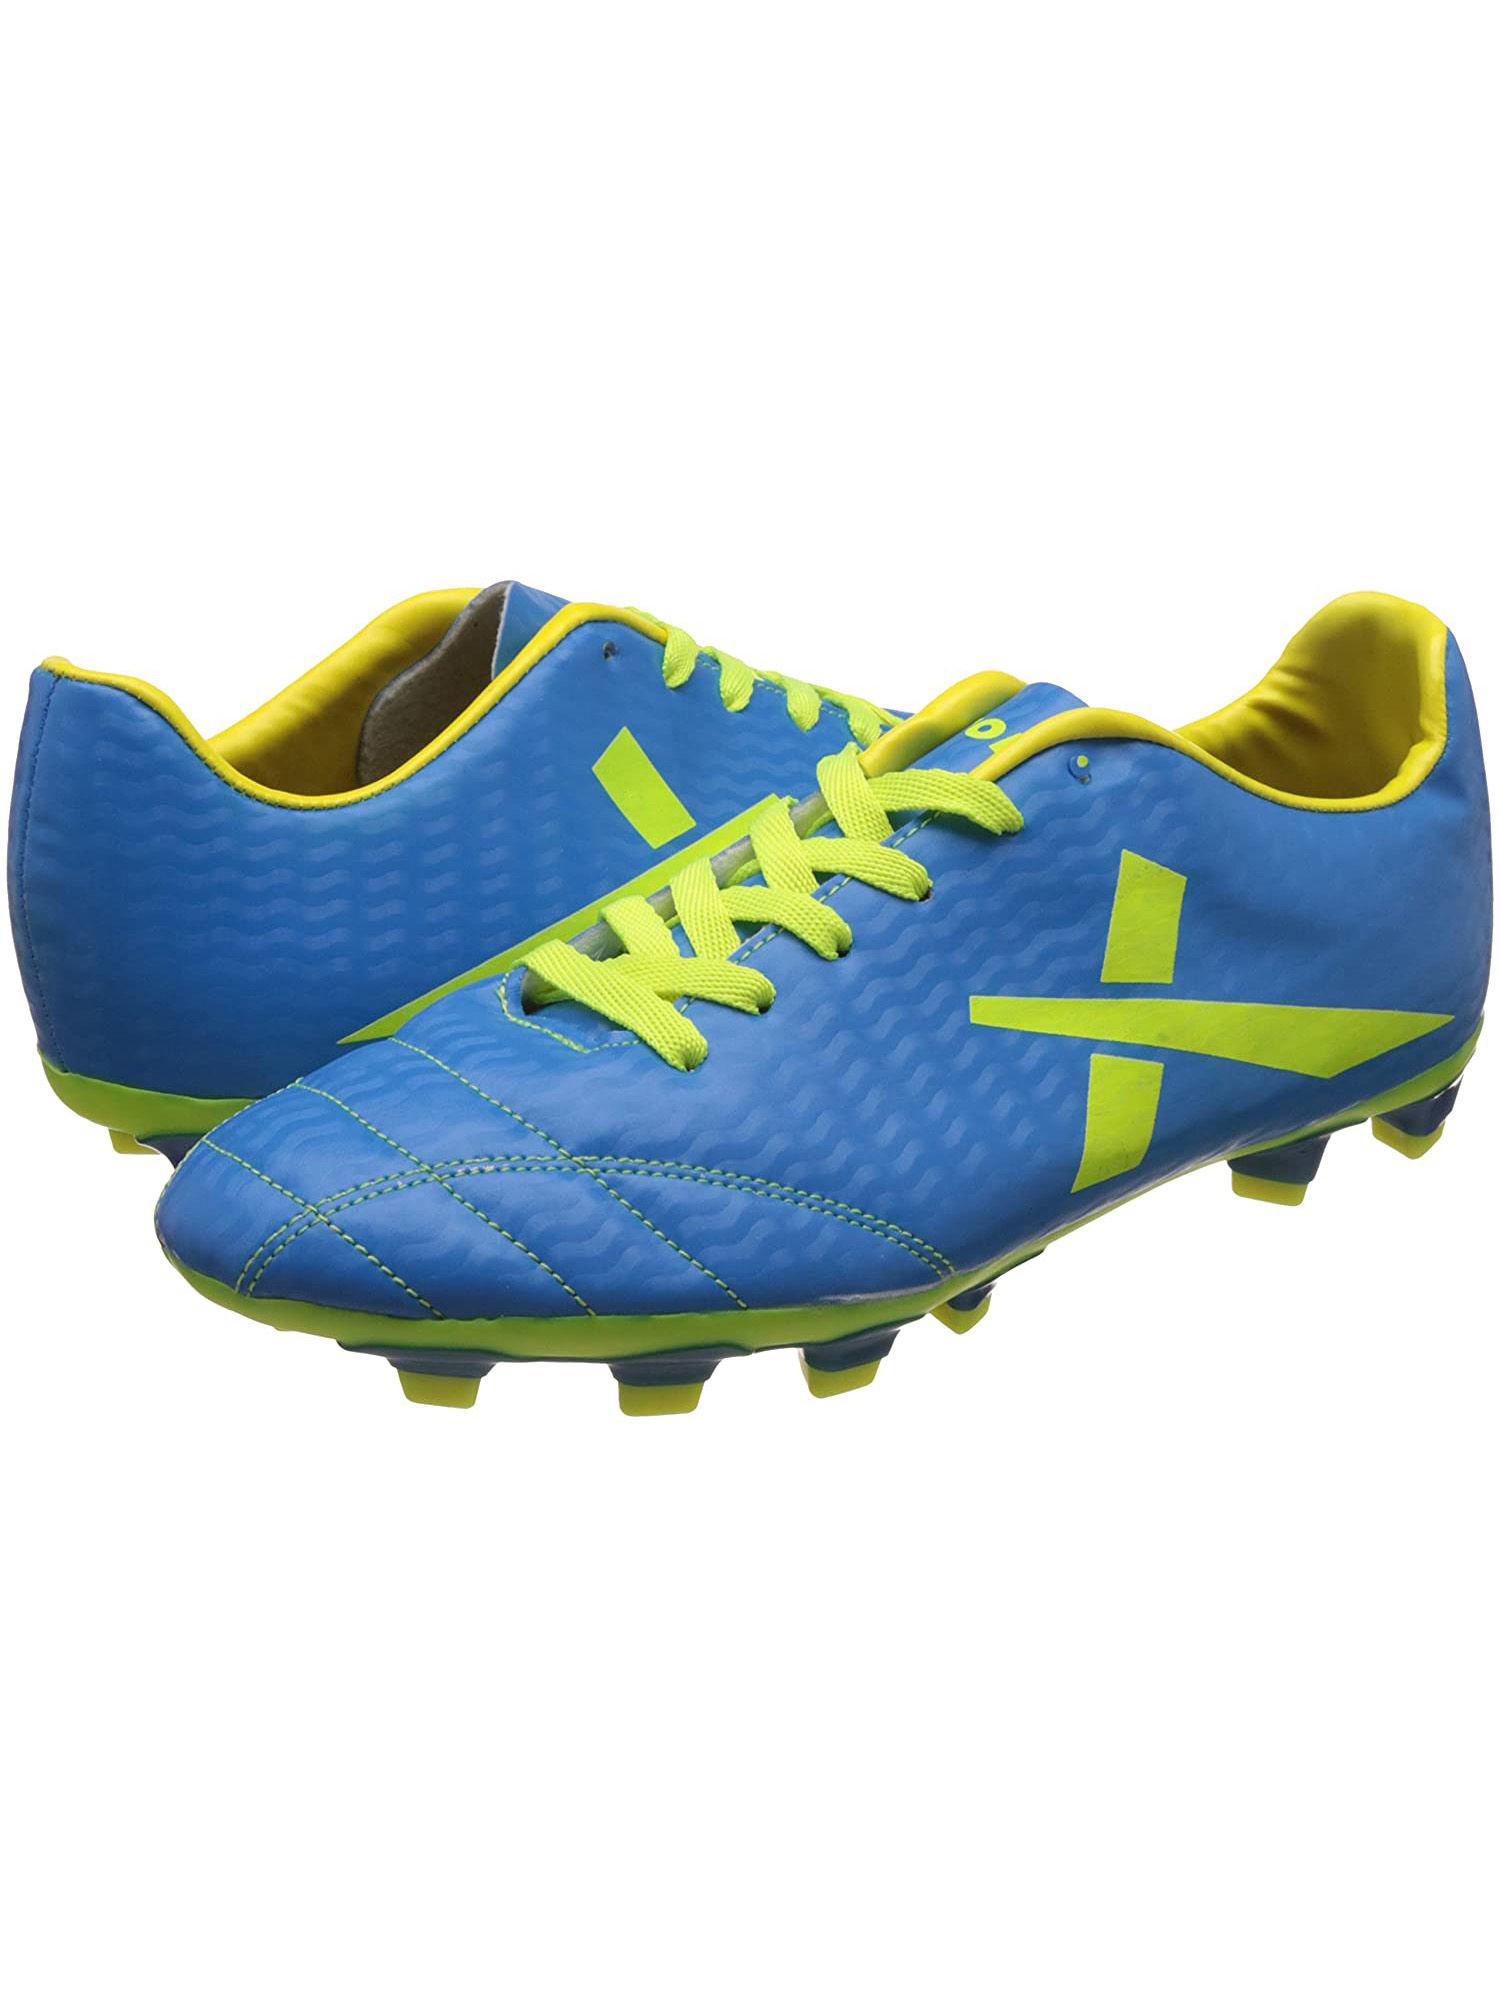 nxg football shoes for men - blue